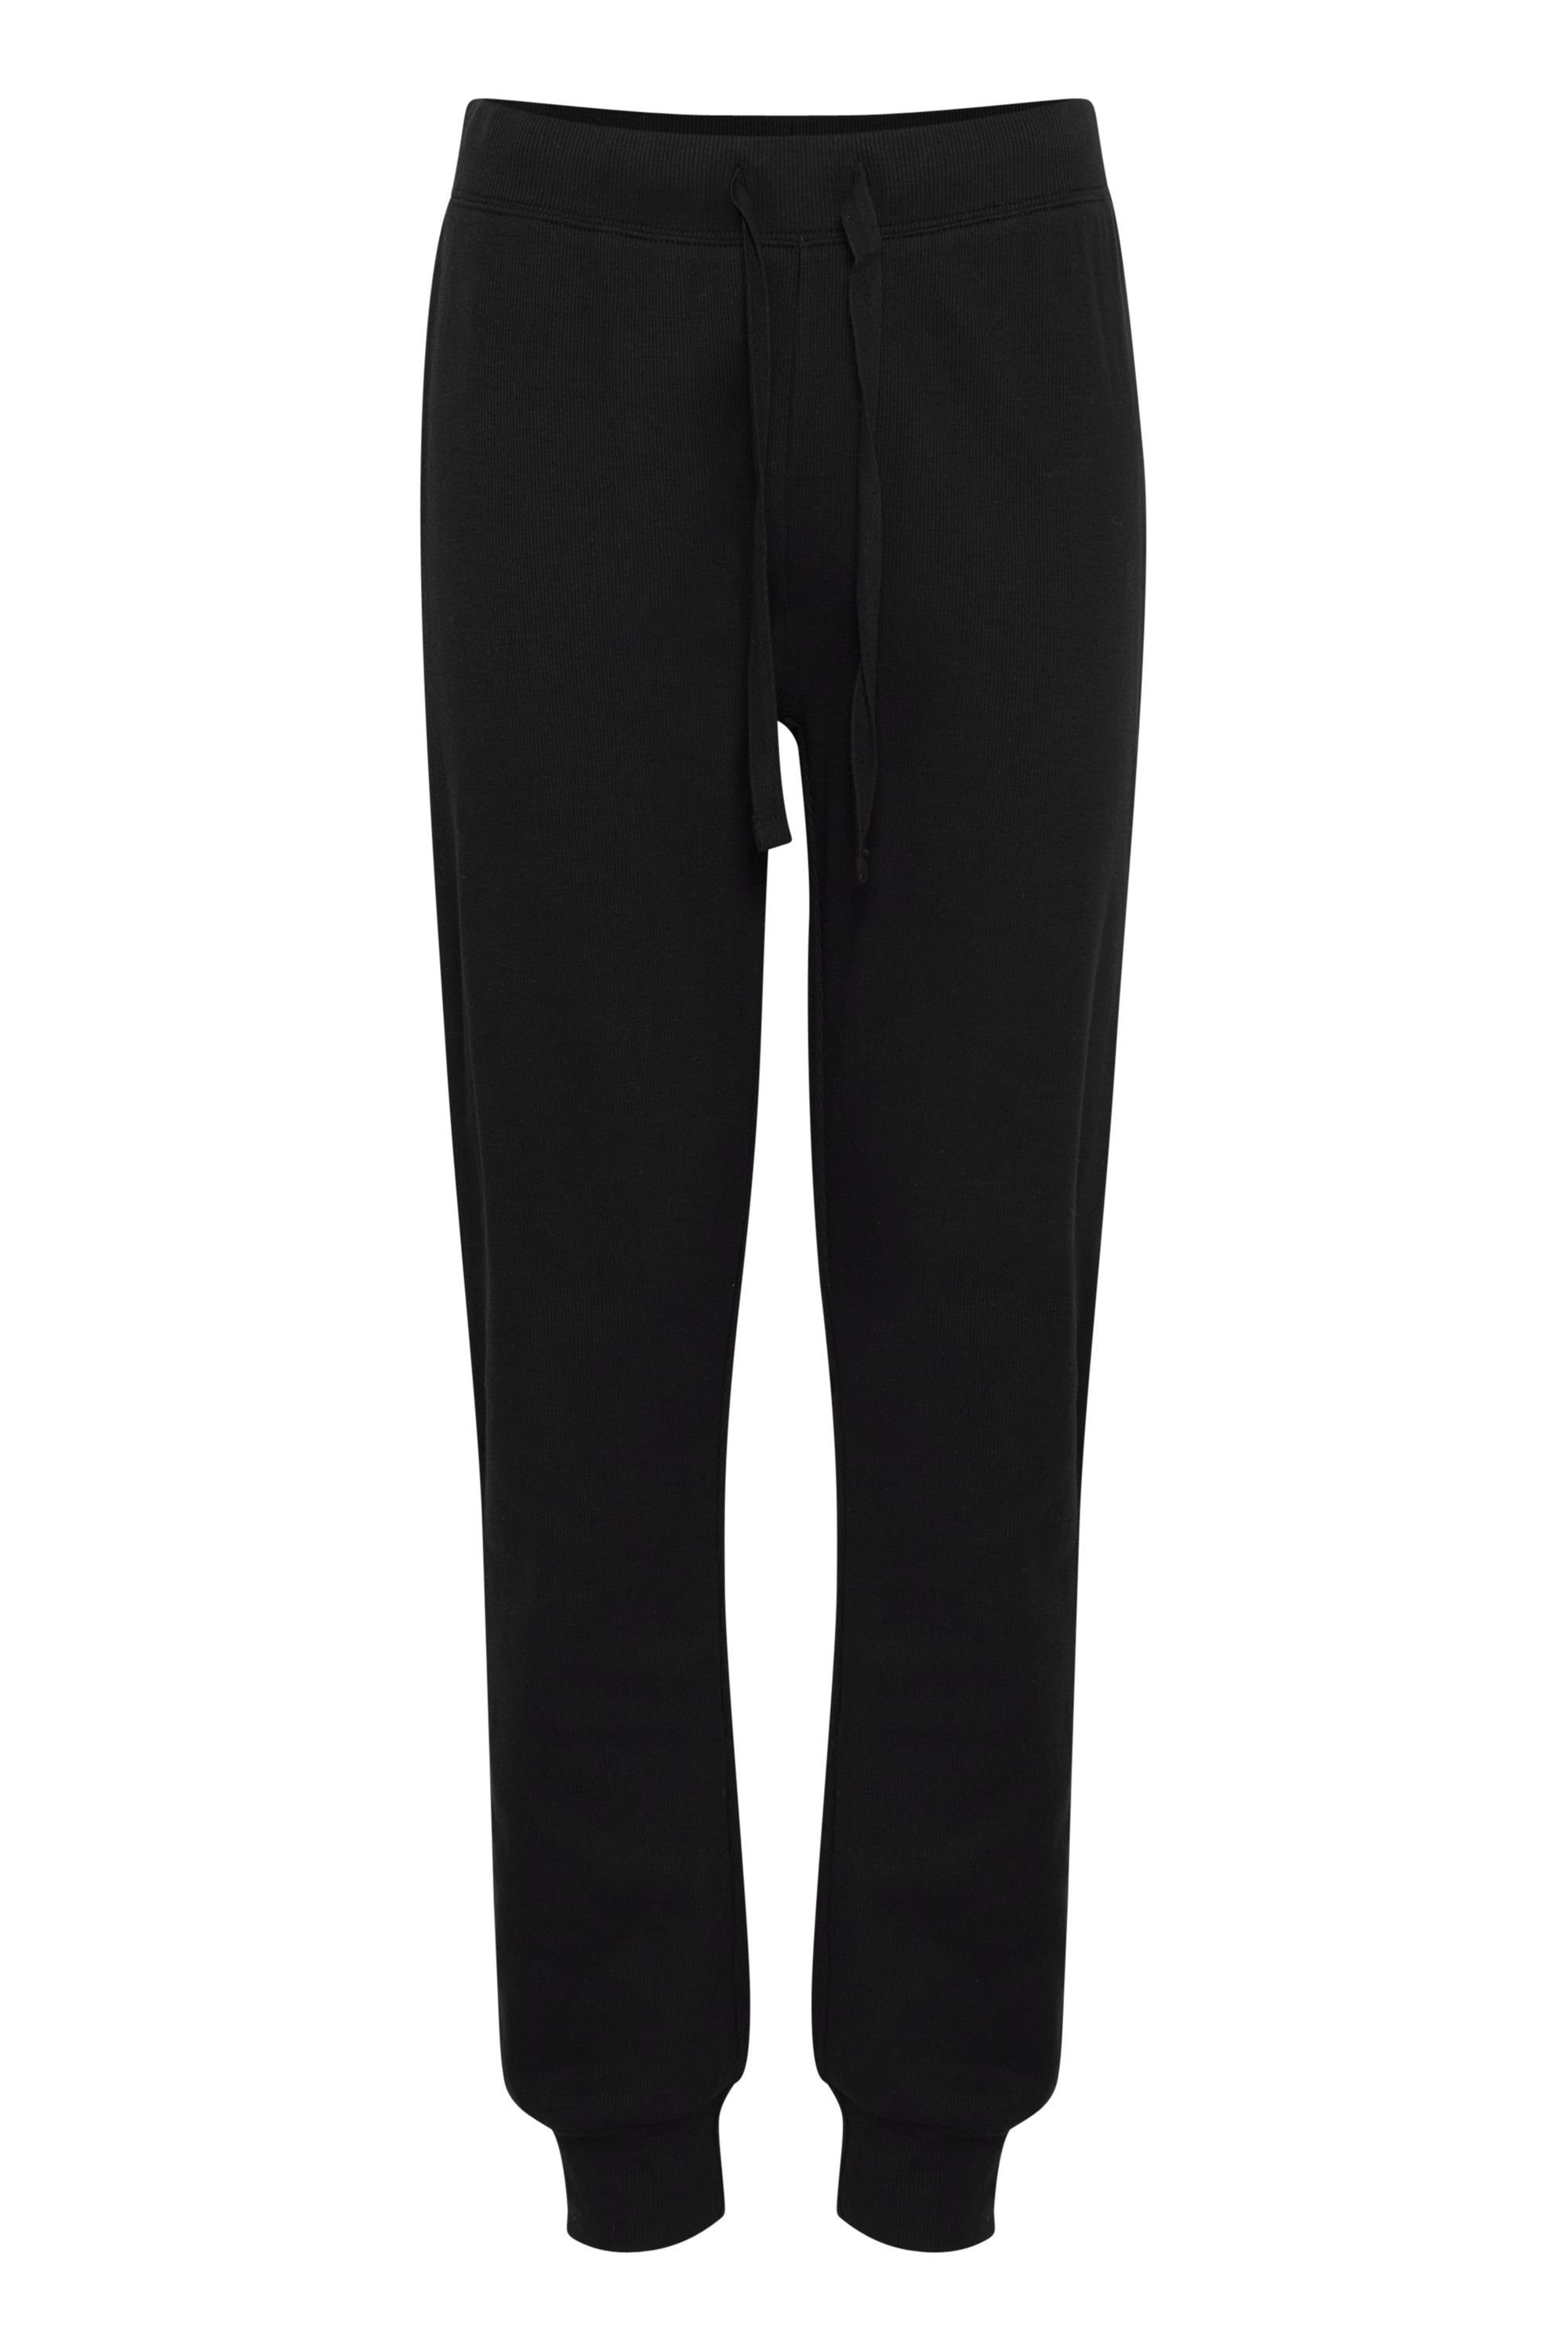 (194007) OXMO Black Sweatpants Liz